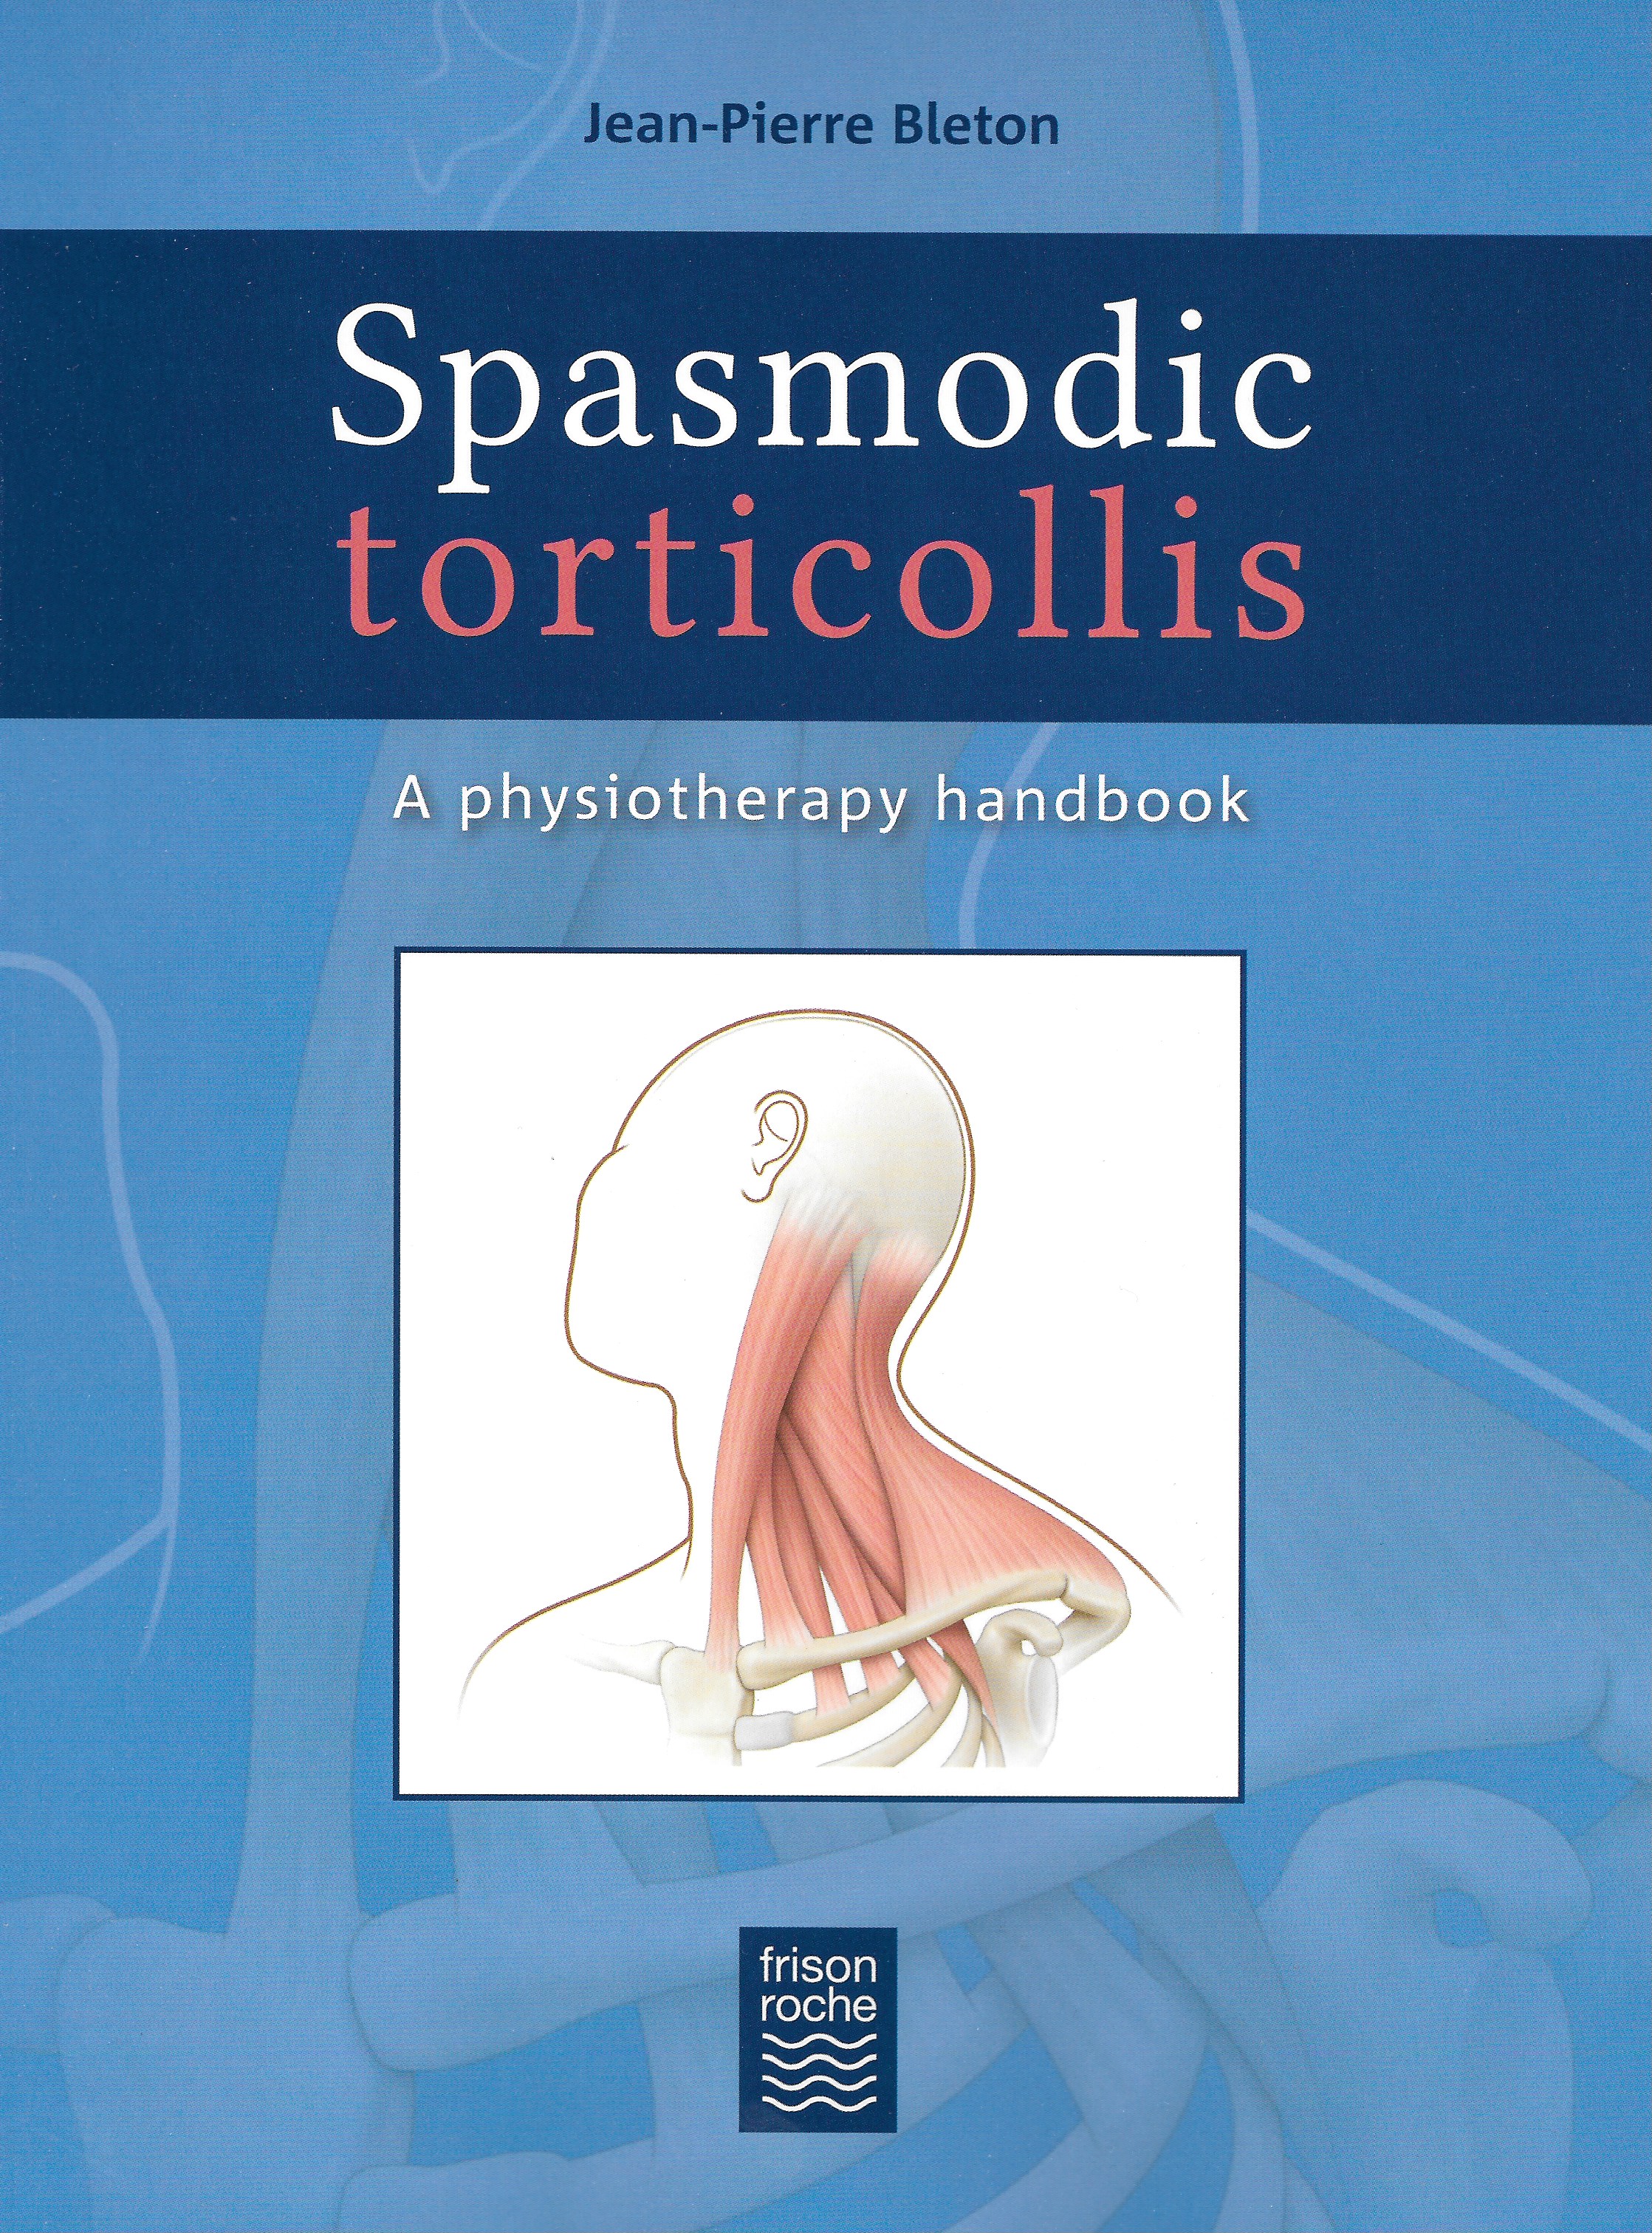 Spasmodic Torticollis A Physiotherapy Handbook Jean Pierre Bleton